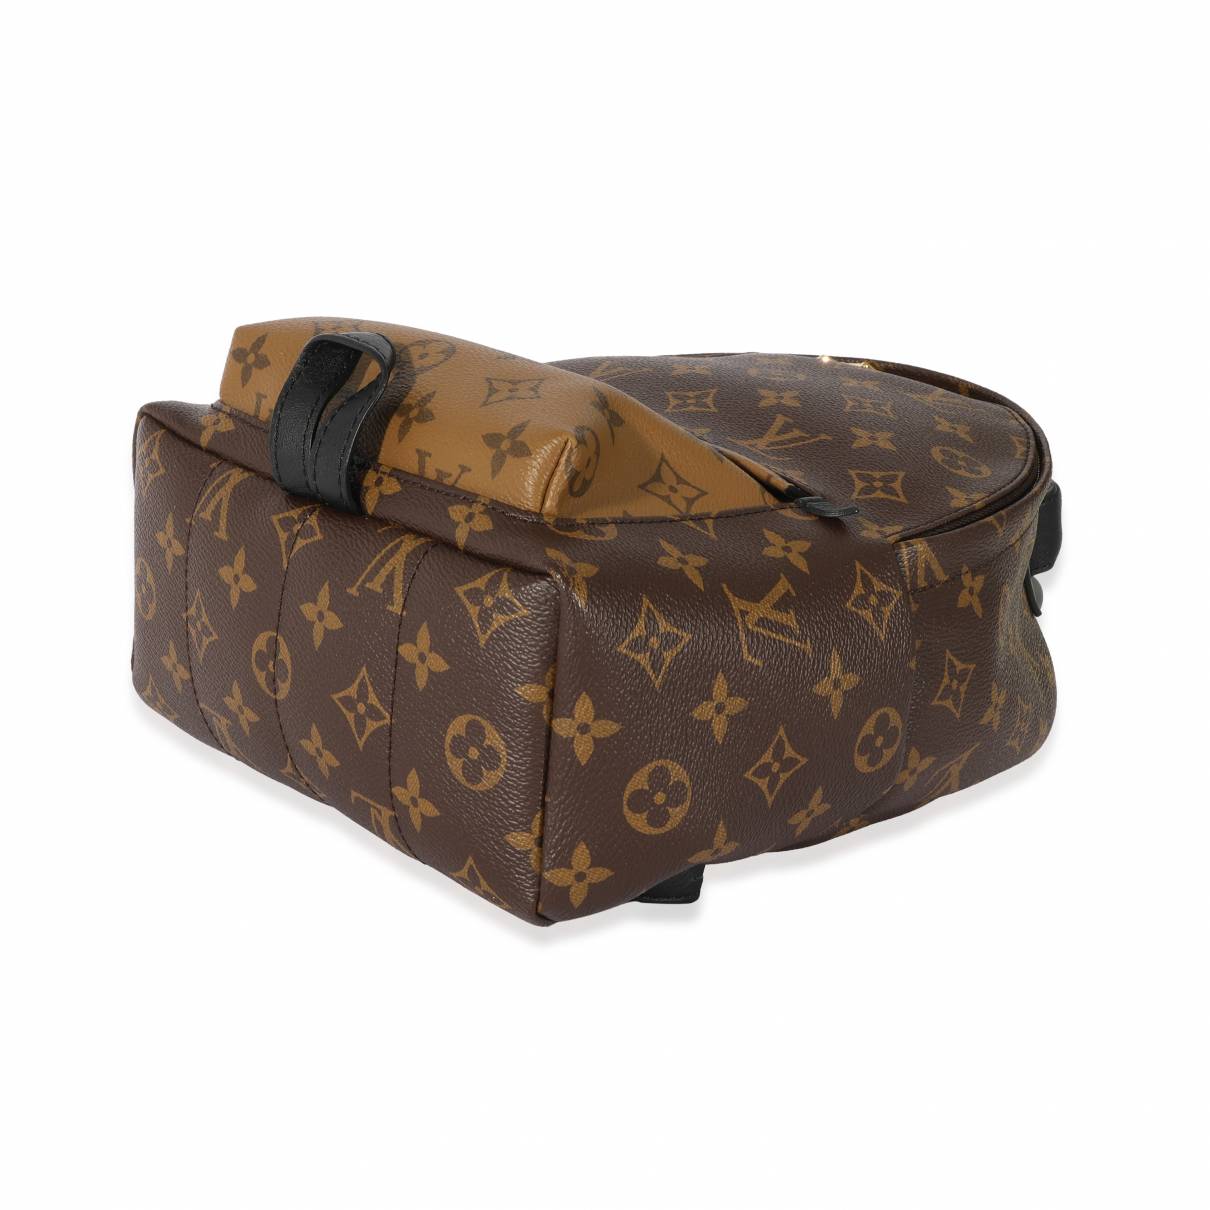 Louis Vuitton, Bags, Louis Vuitton Diaper Bag